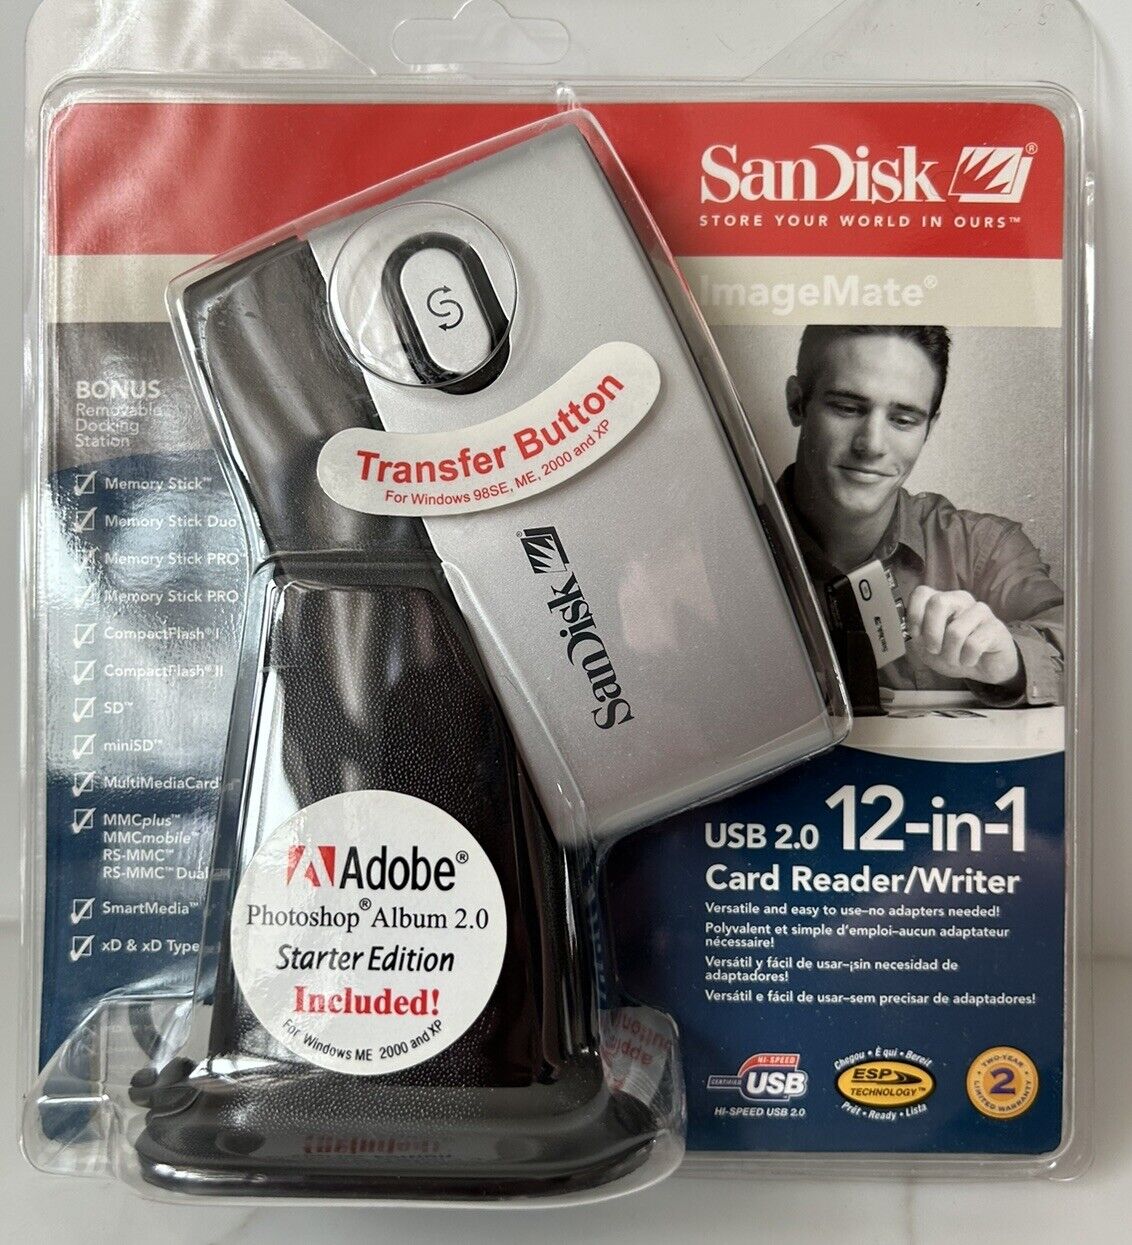 SanDisk ImageMate USB 2.0 12-in-1 Card Reader/Writer Model SDDR-89-A15 NEW